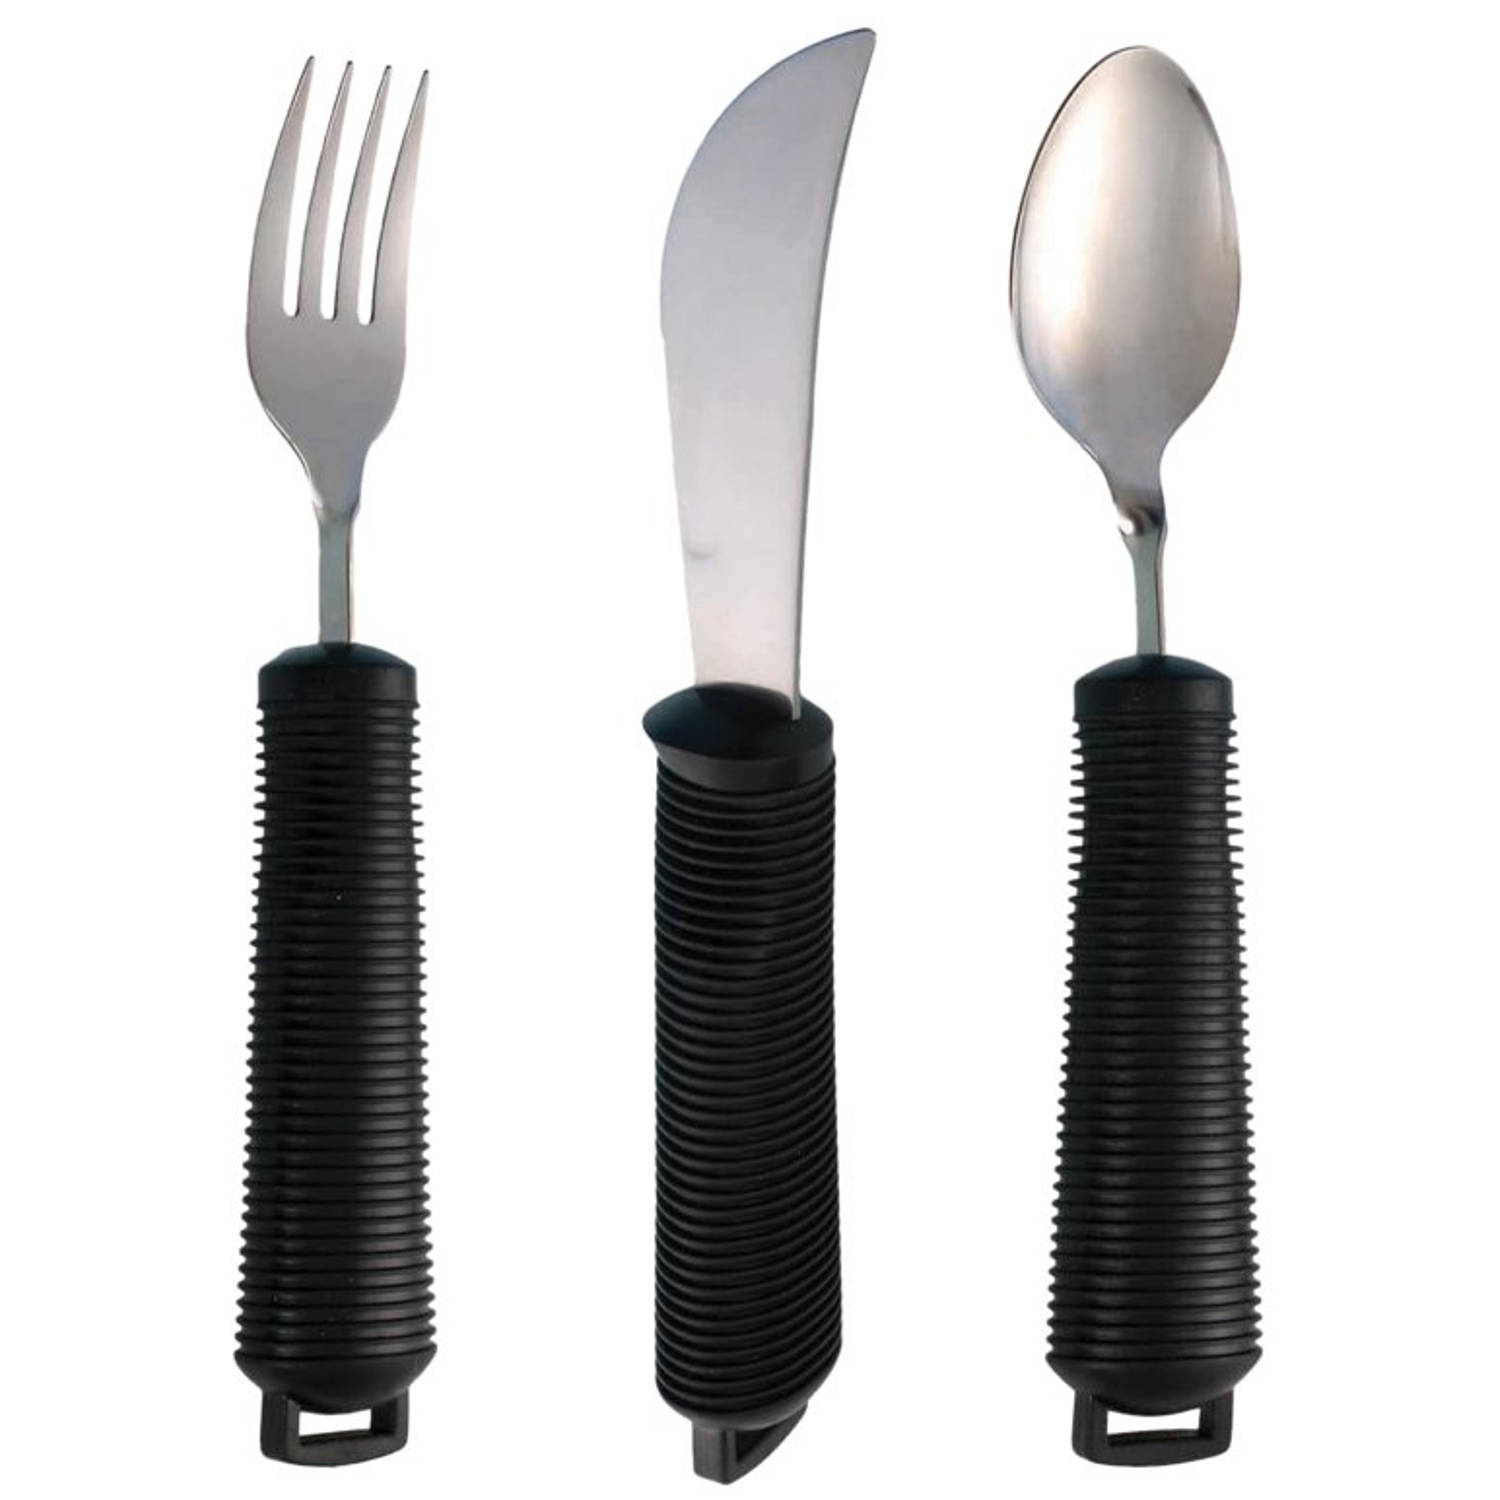 softgrip mes, buigbare vork en lepel voor hulpbehoevenden